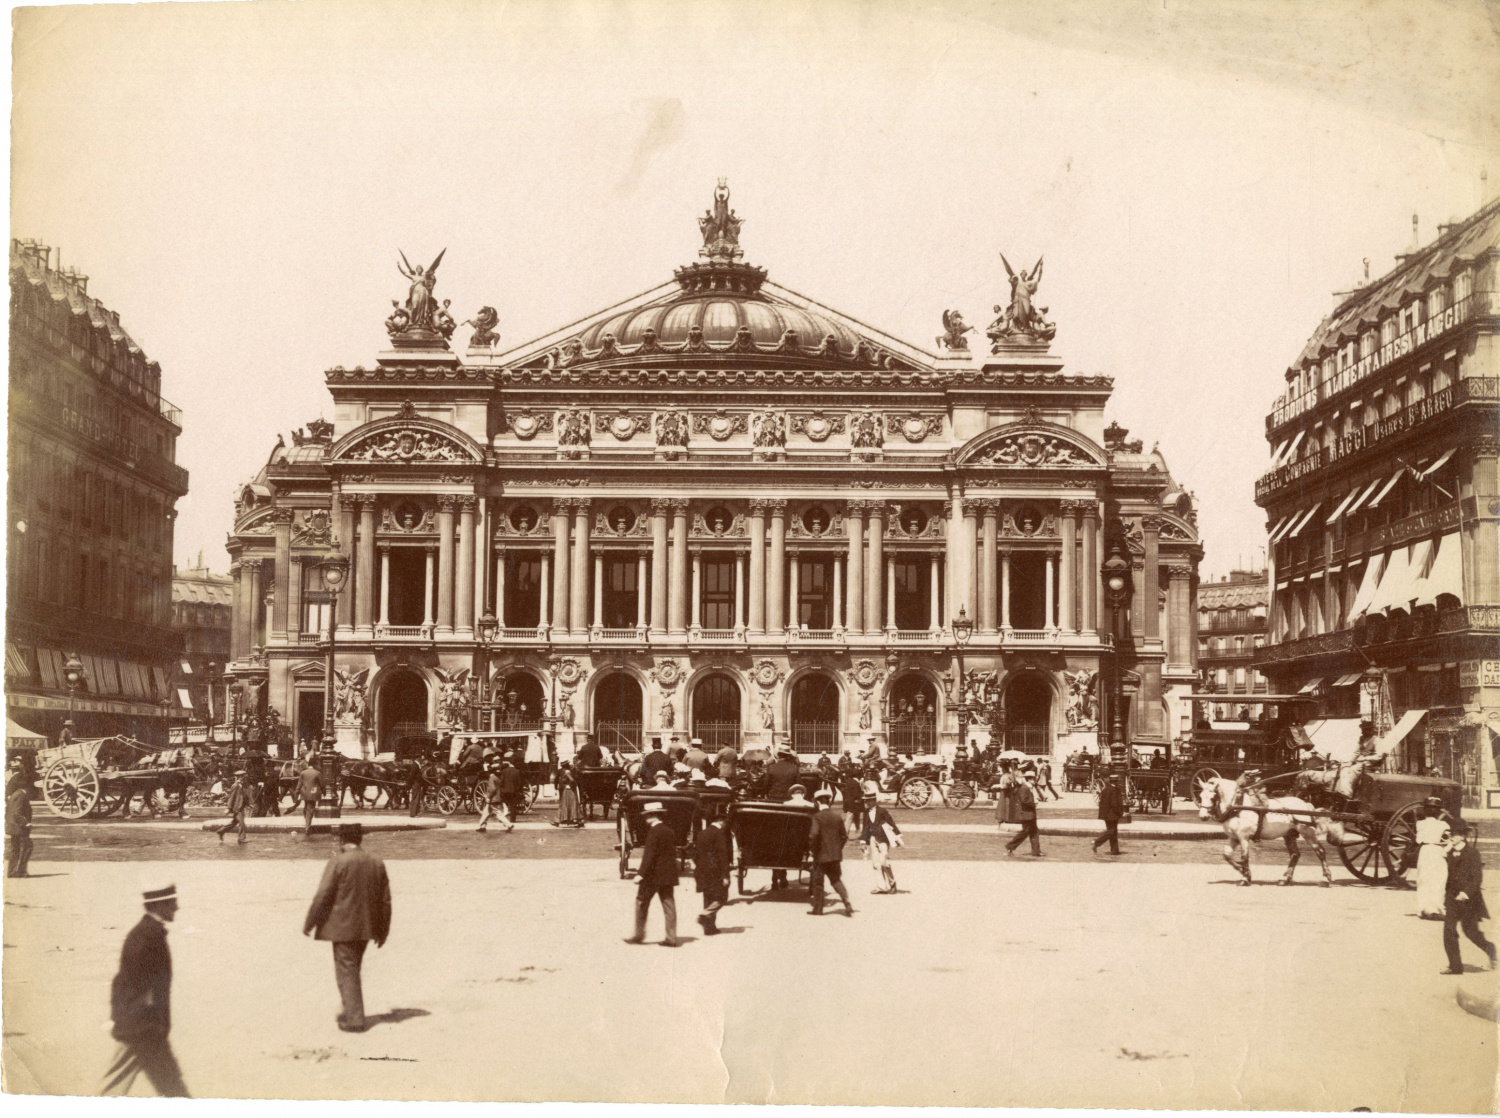 France, Paris, Opéra Garnier by Photographie originale / Original ...